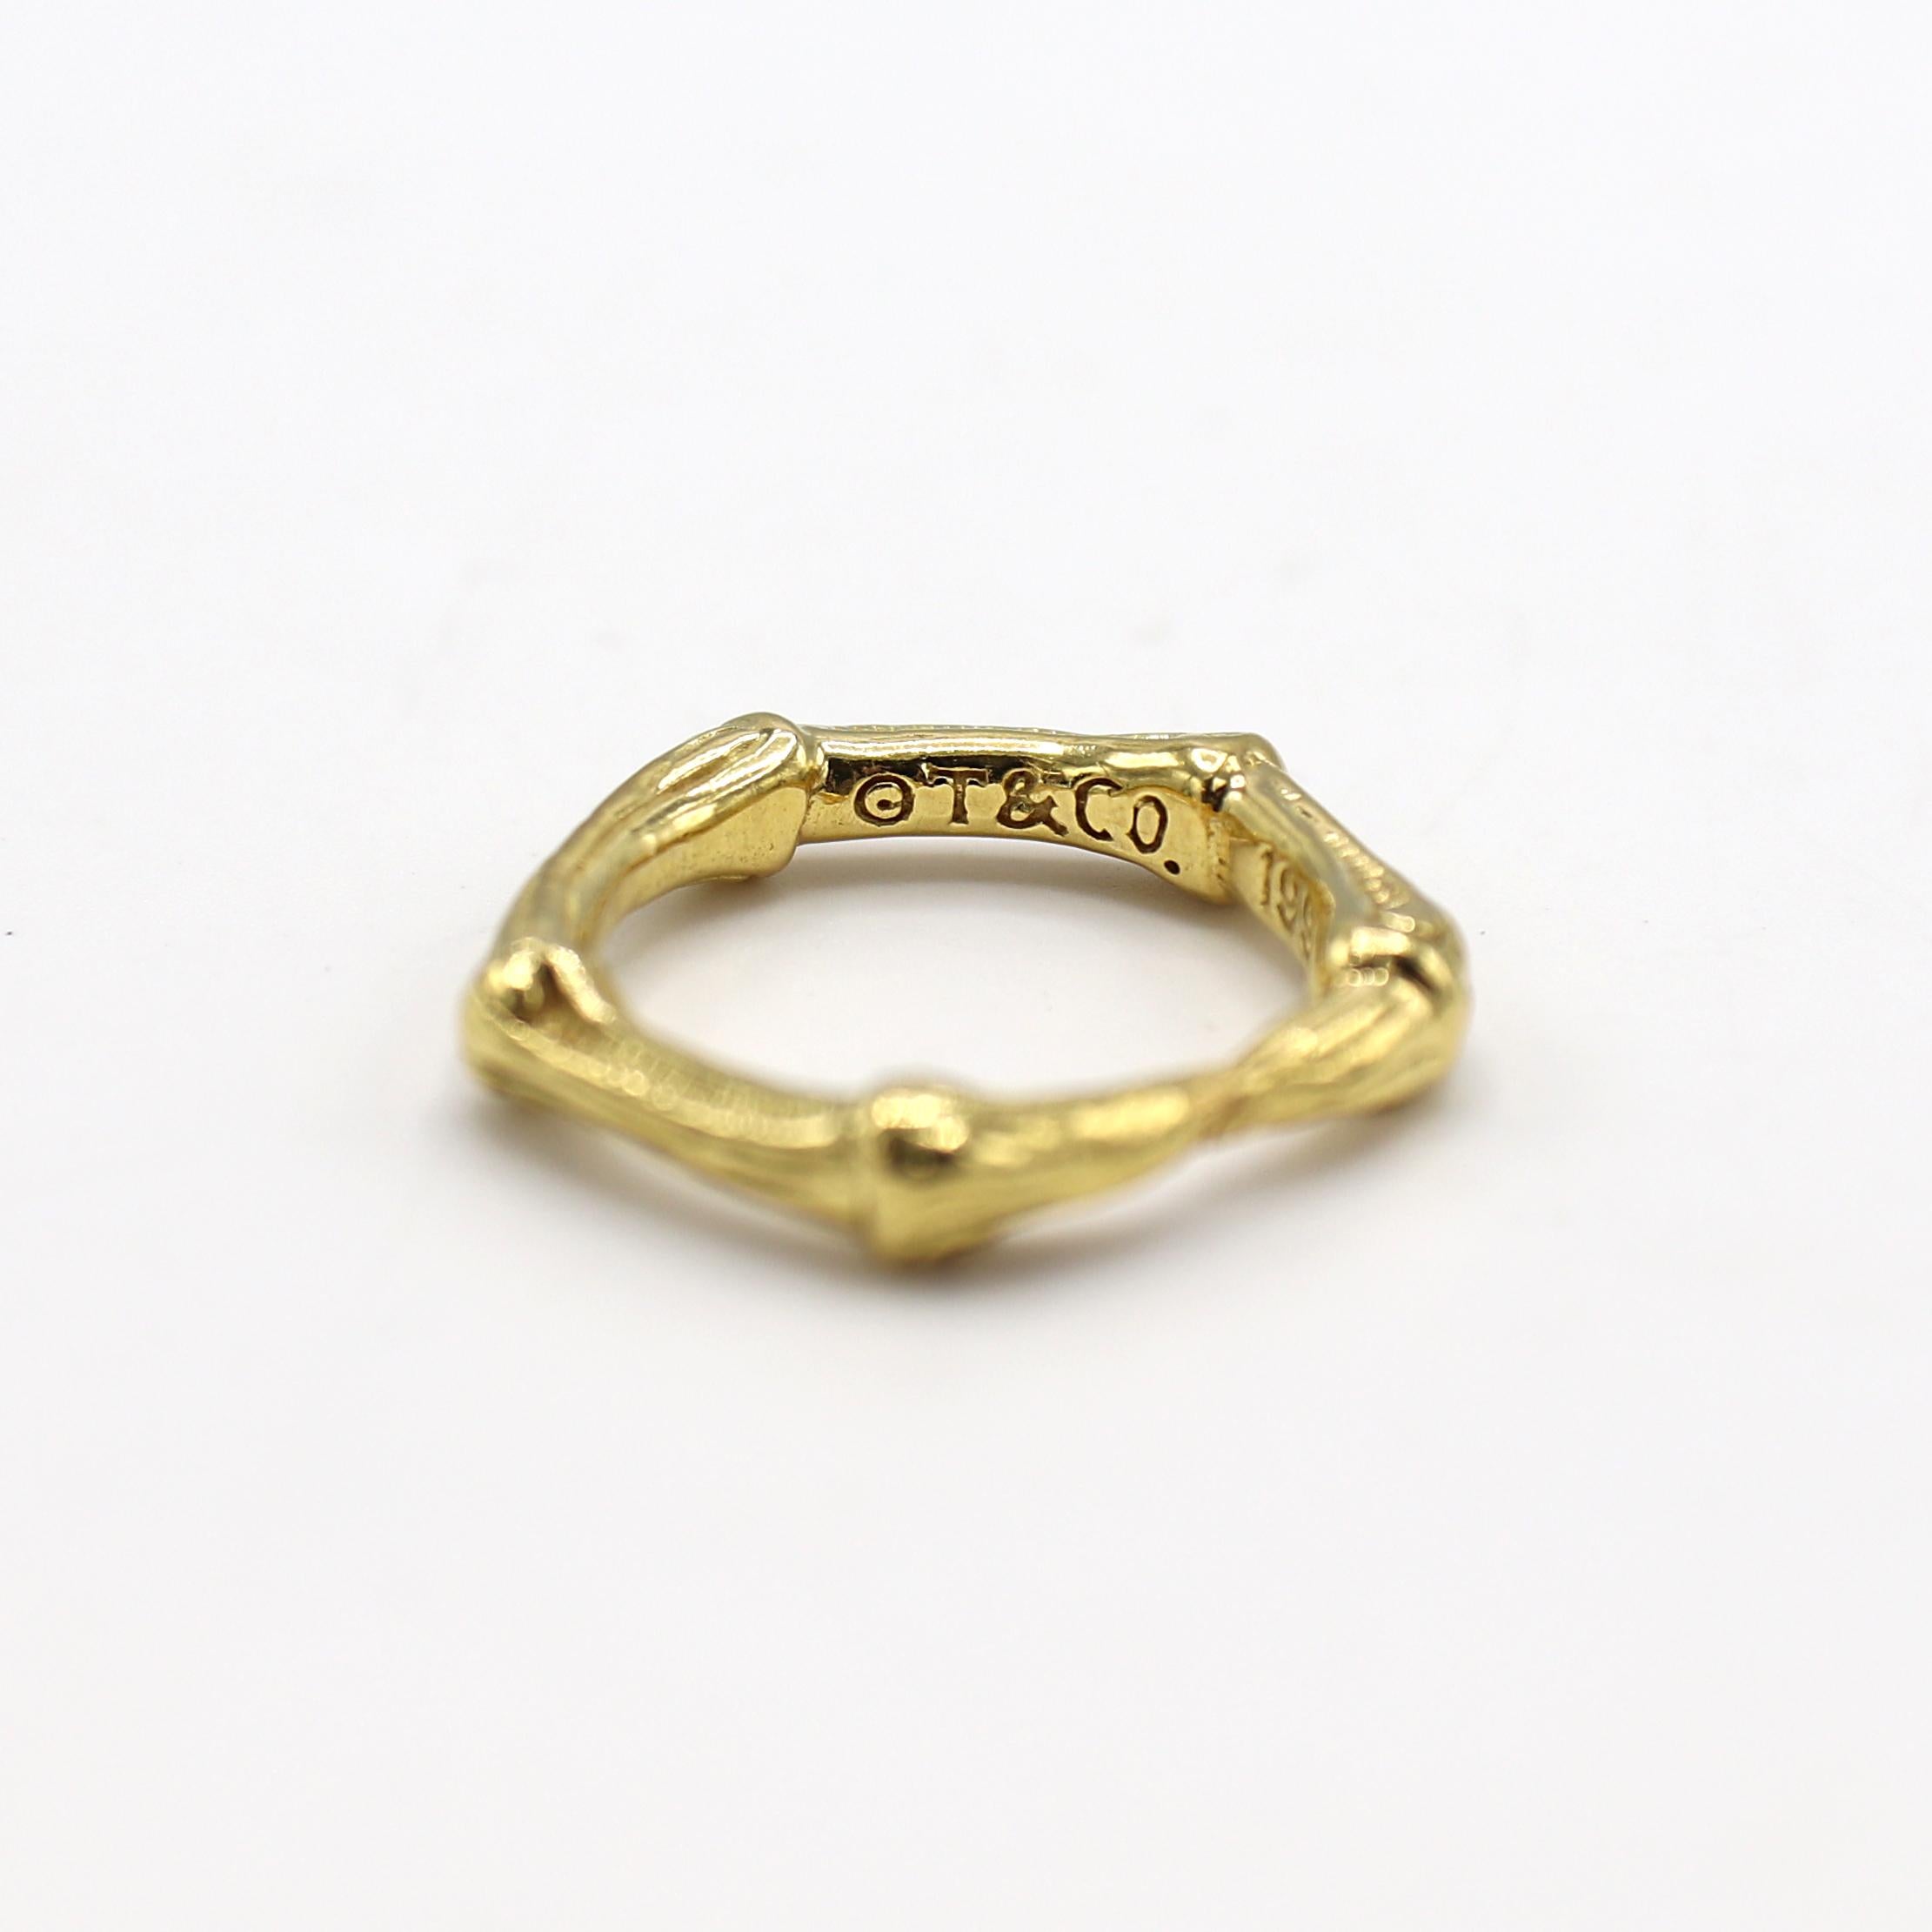 Tiffany & Co. Bamboo 18 Karat Yellow Gold Band Ring 1996
Metal: 18k yellow gold
Weight: 6.27 grams
Width: 4mm
Size: 6.25 (US)
